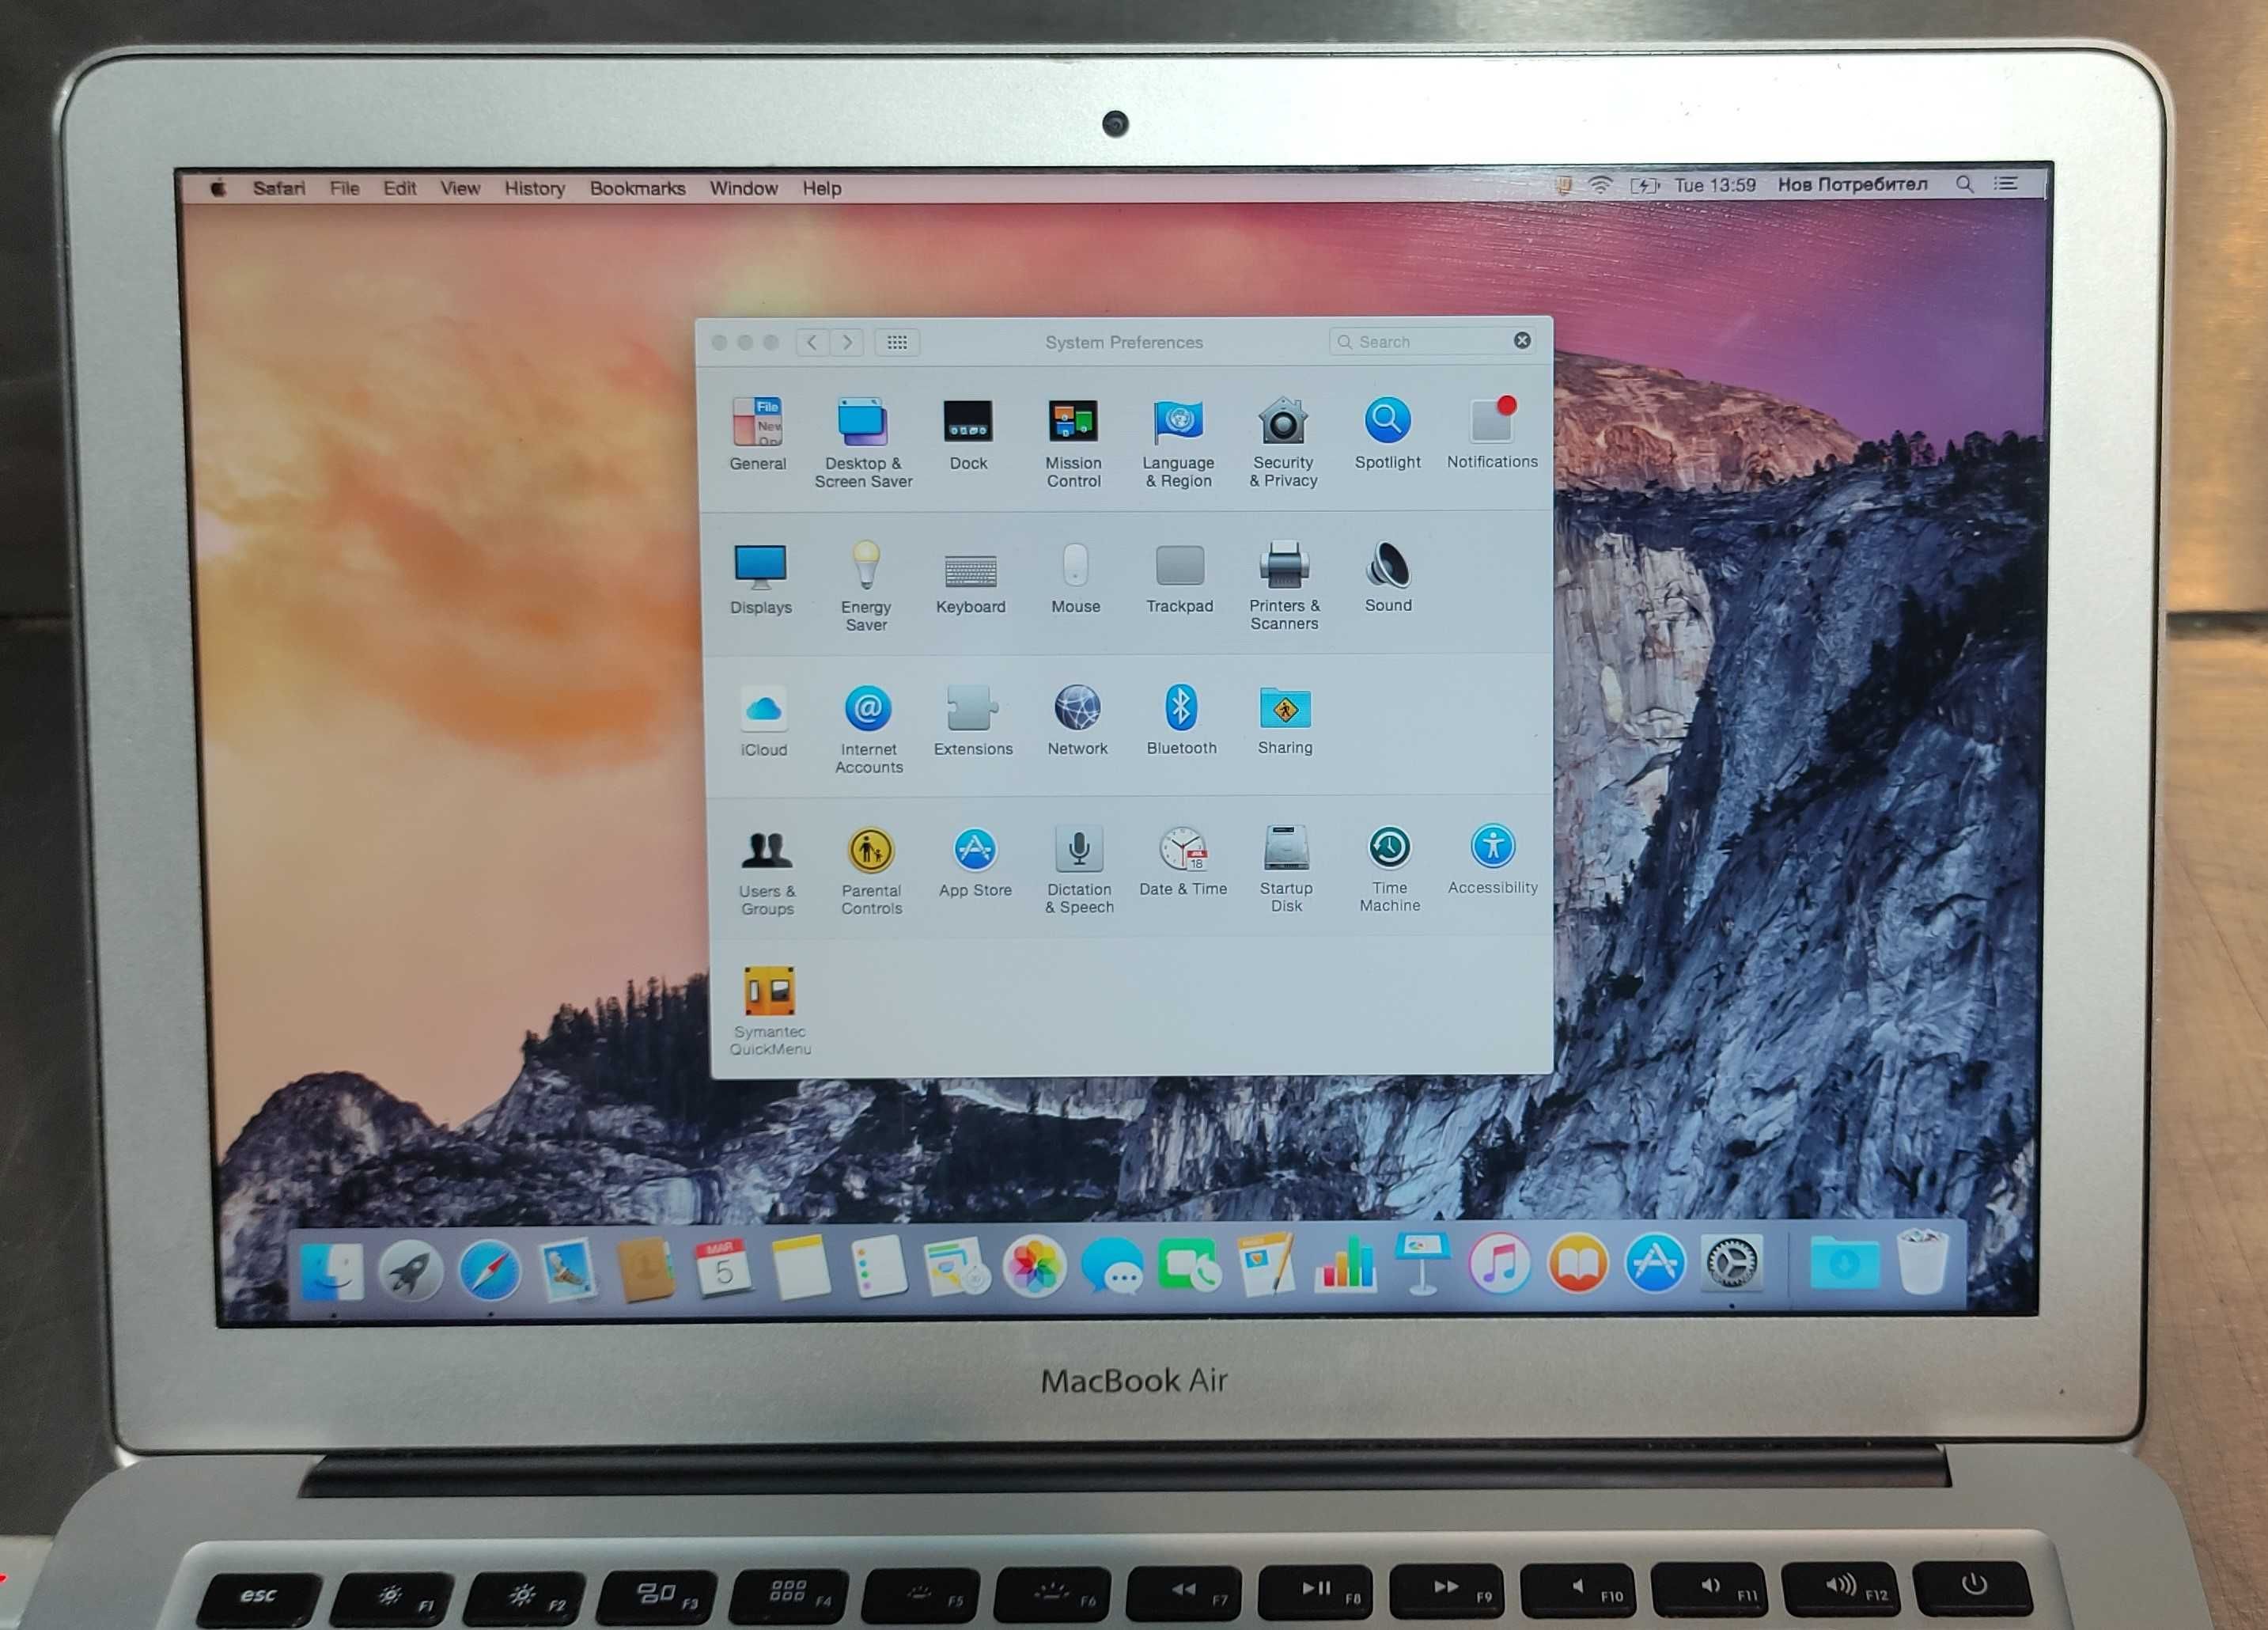 Apple MacBook Air 13" Early 2015 1.6 GHz Intel Core i5, 4 GB 128GB SSD